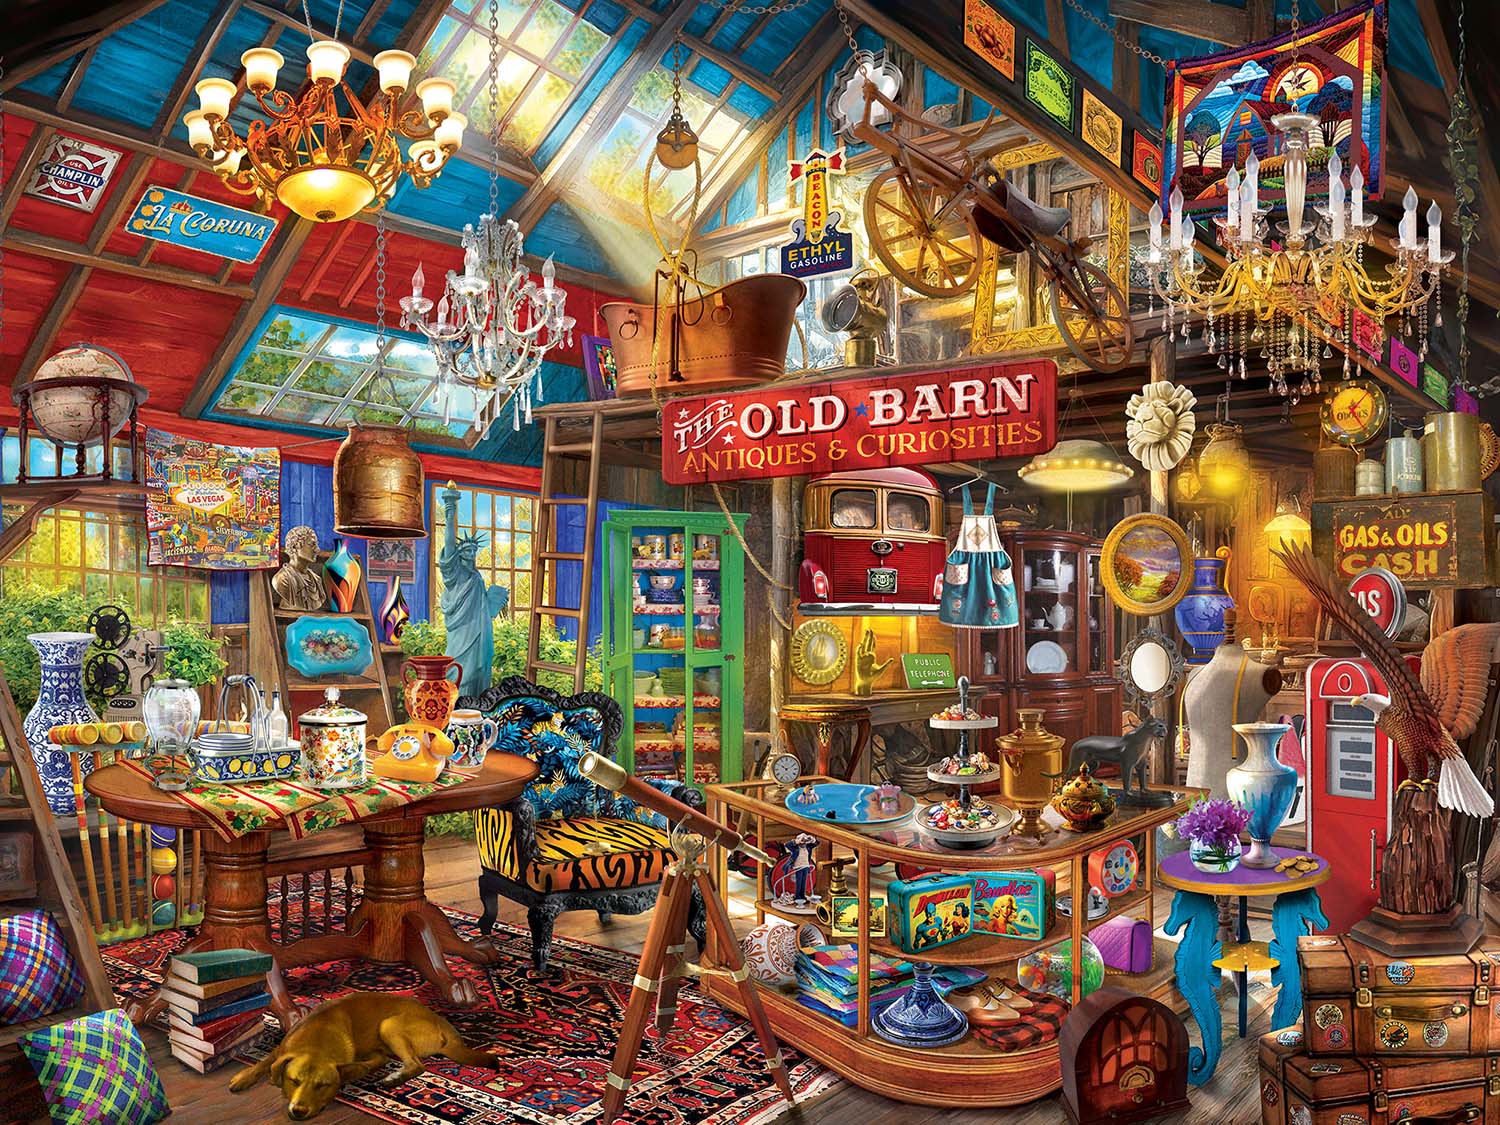 Shopkeepers - Hidden Gems Nostalgic & Retro Jigsaw Puzzle